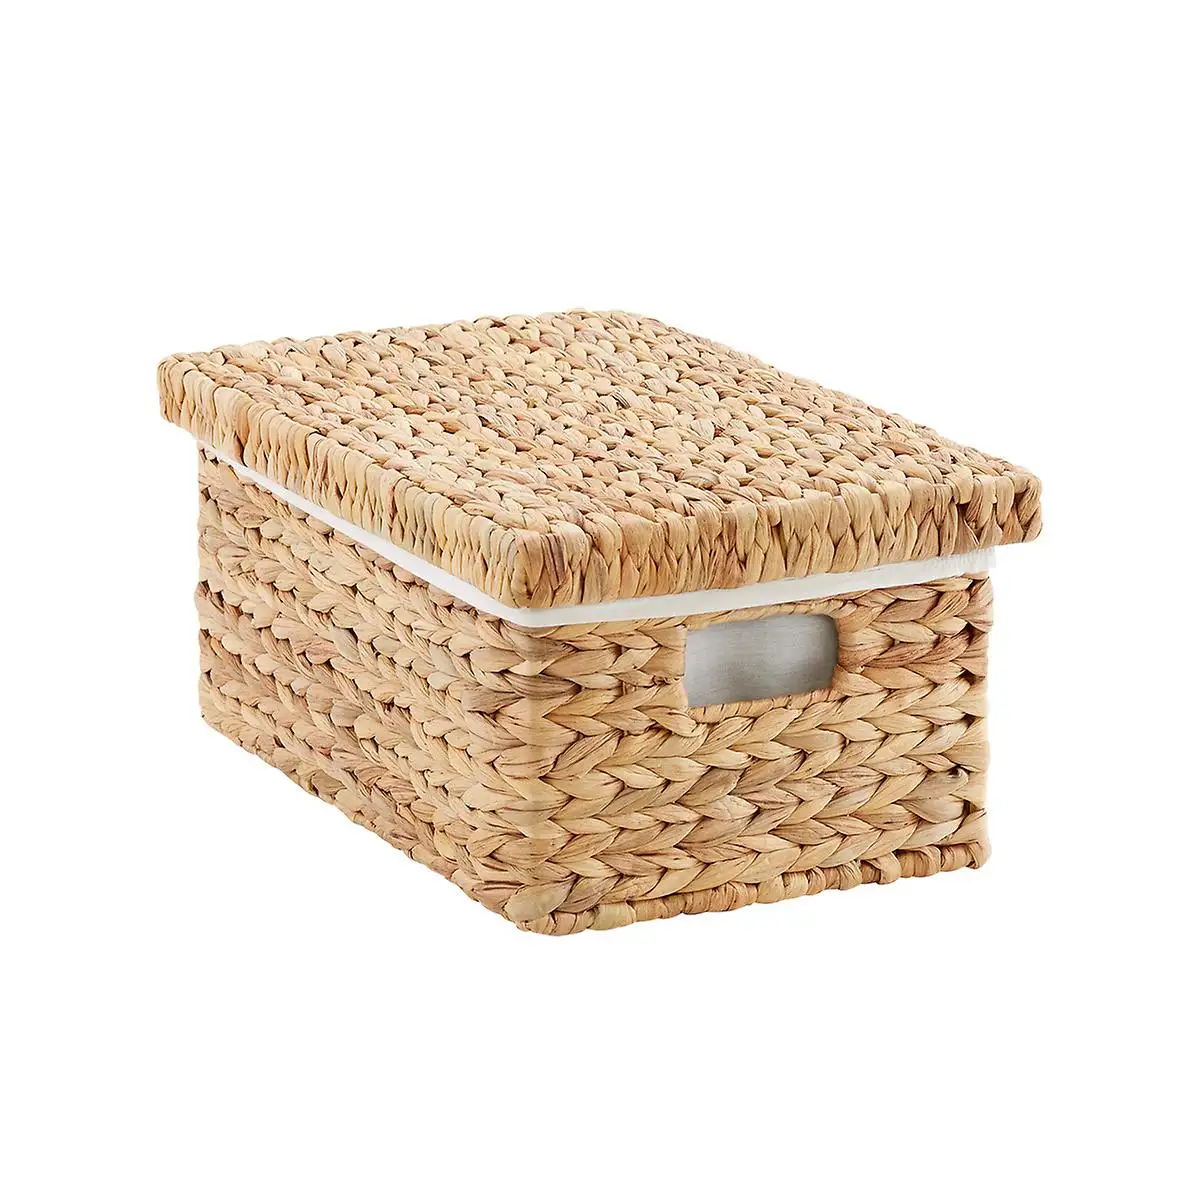 Viet Nam hot sell handmade wholesale Small Natural Water Hyacinth Box storage basket hanging baskets